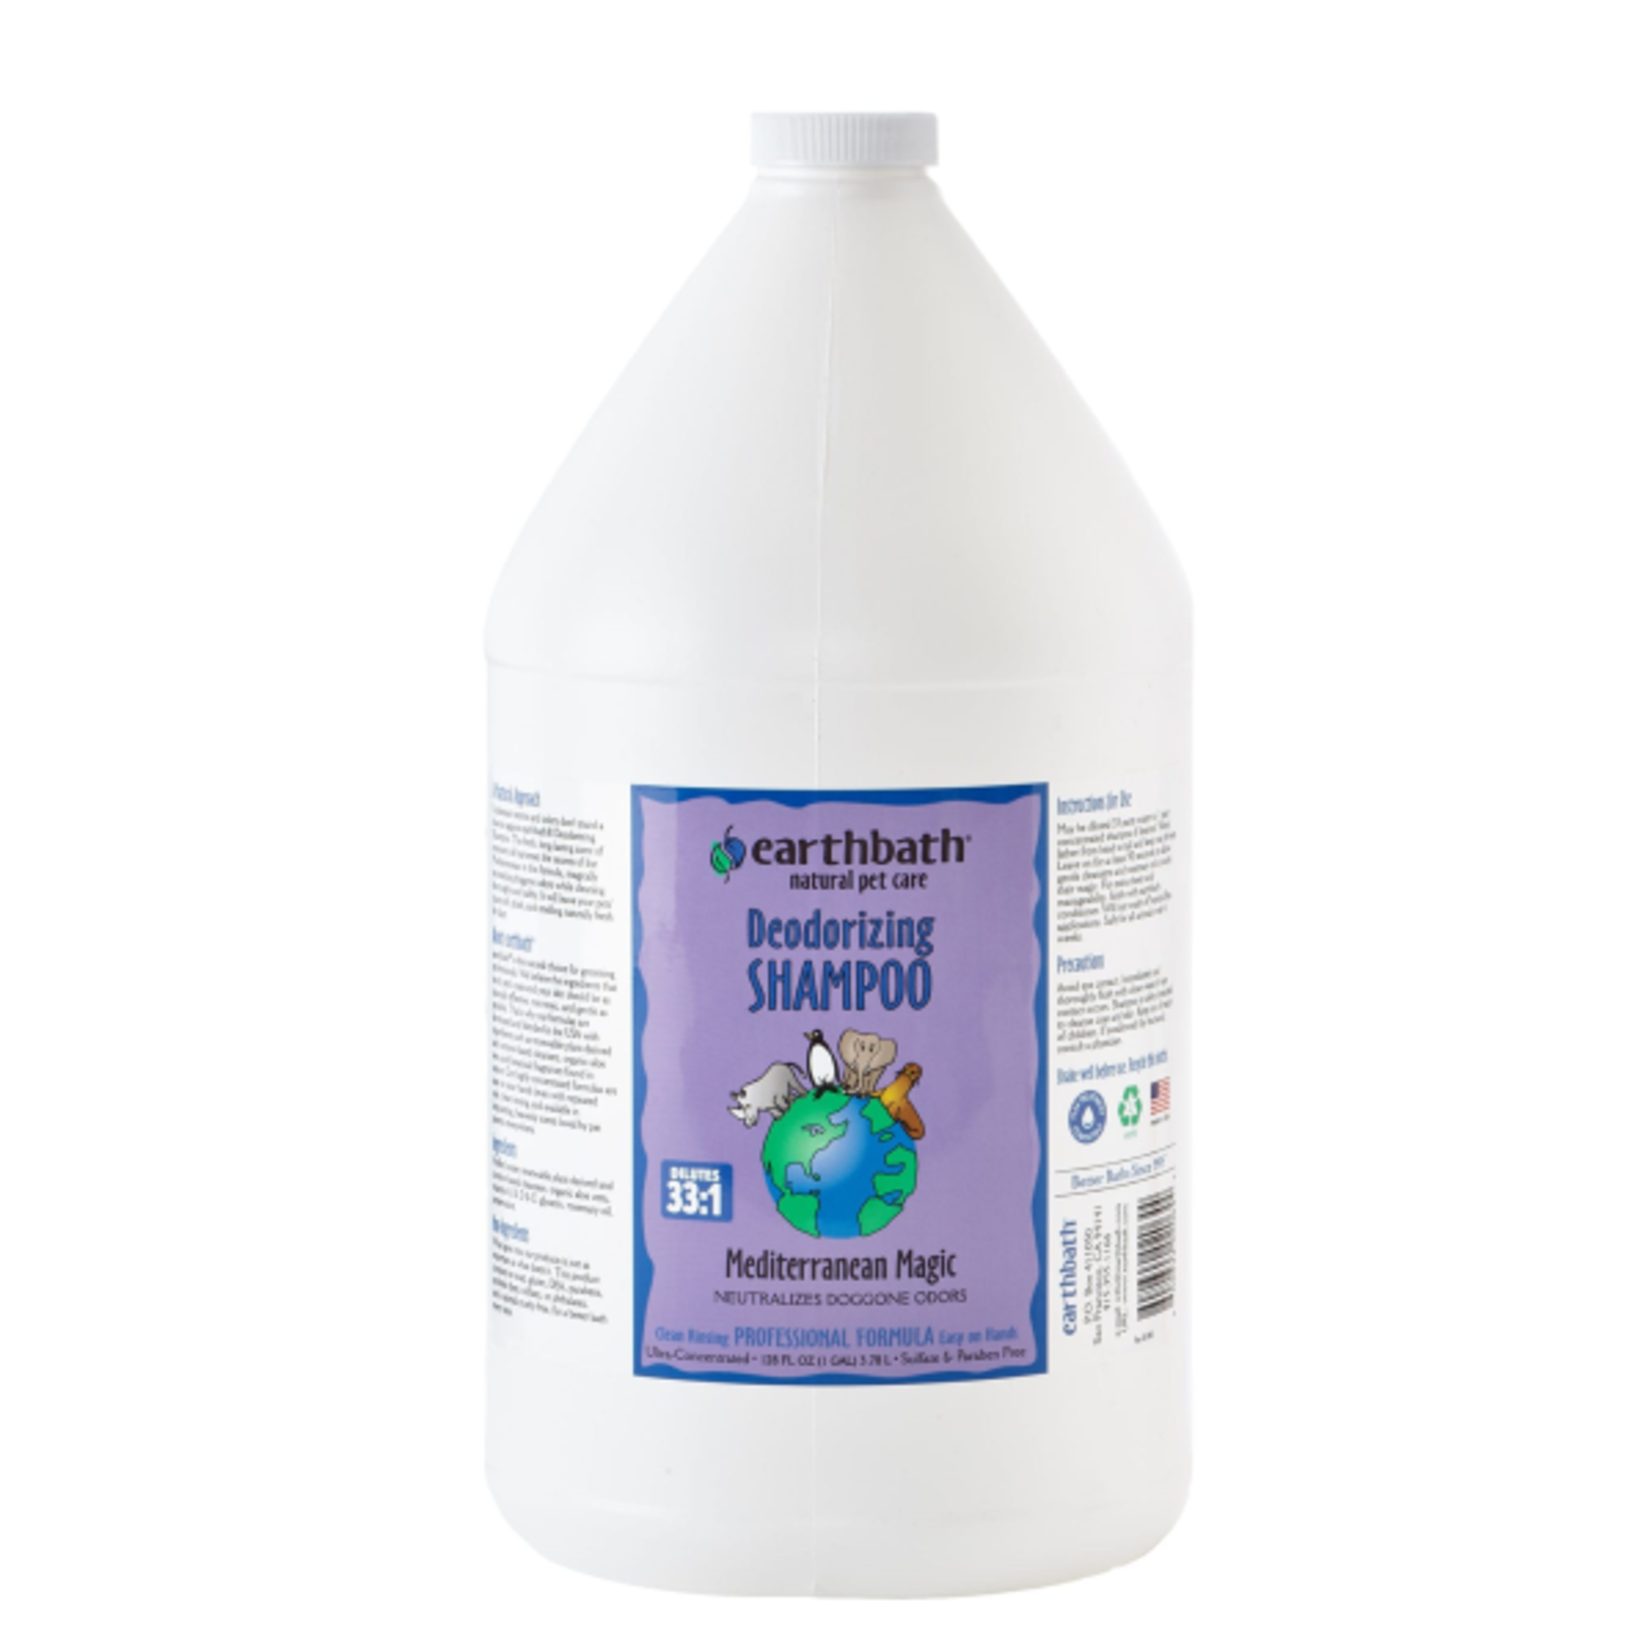 EARTH BATH earthbath Deodorizing Shampoo Mediterranean Magic 1 gal